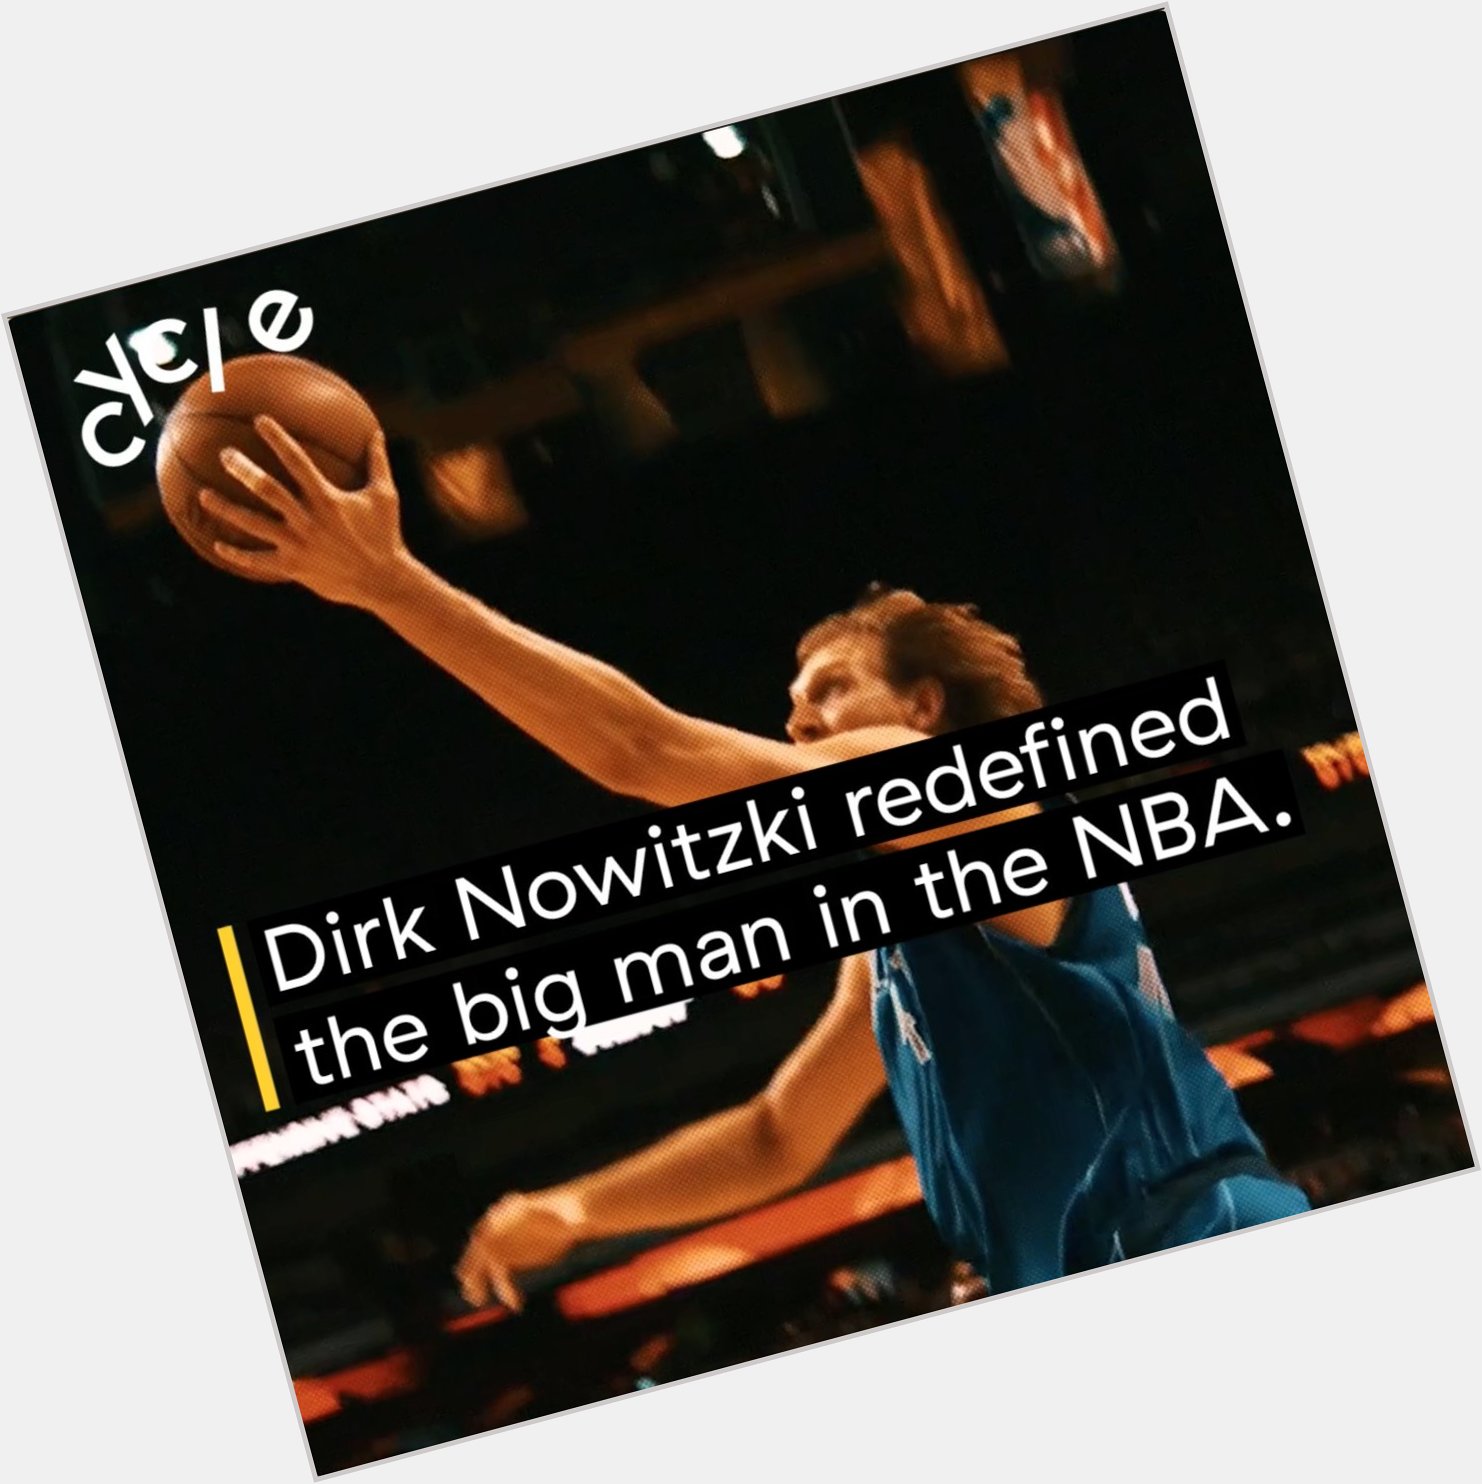 From Deutschland to Dallas, Dirk Nowitzki changed the way big men ball. Happy birthday to the icon, 